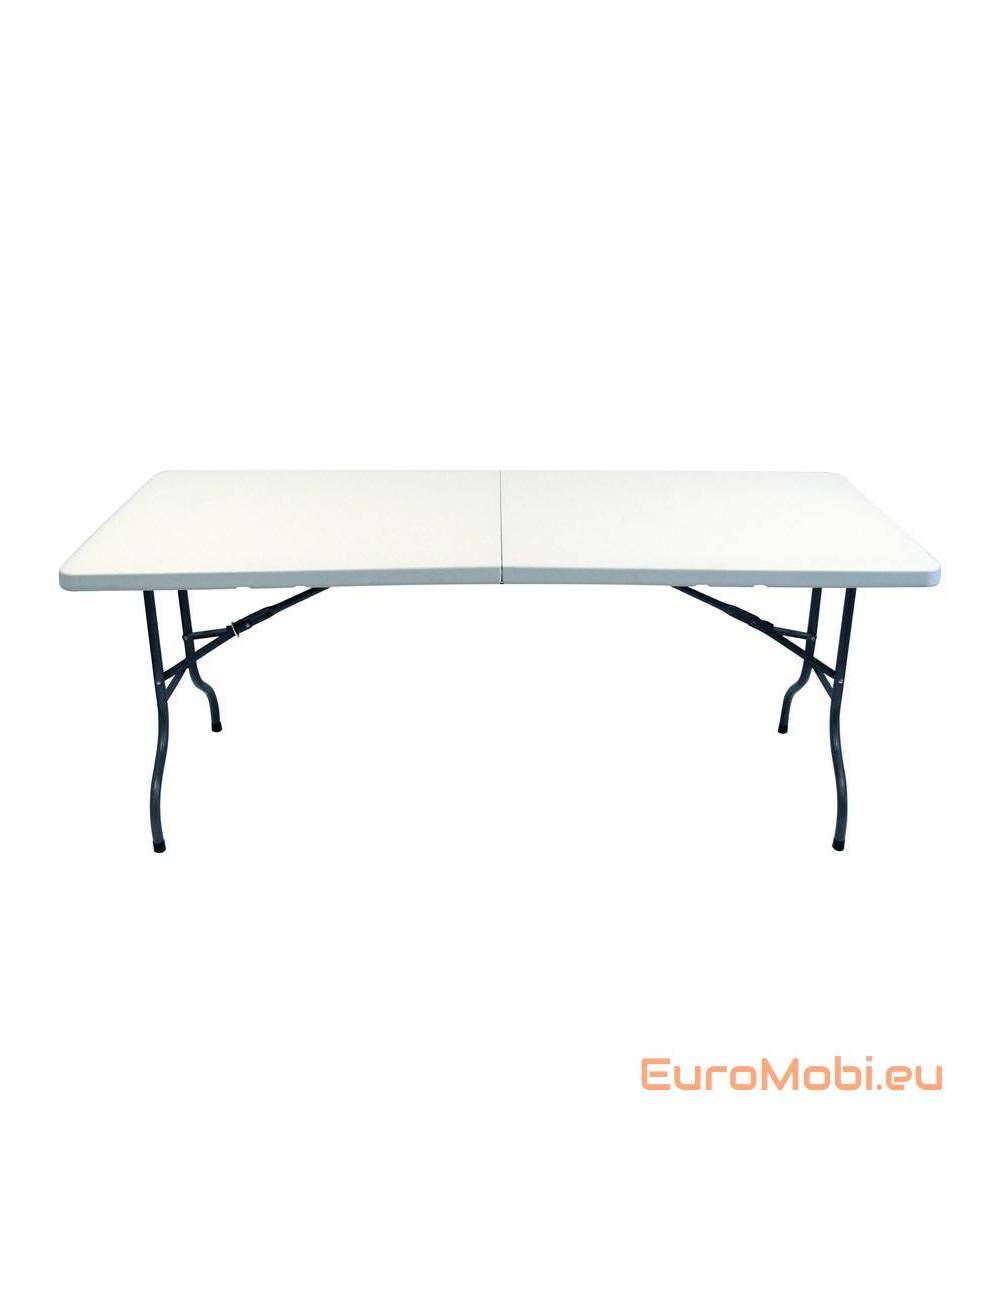 Folding table Tully 180x76cm open